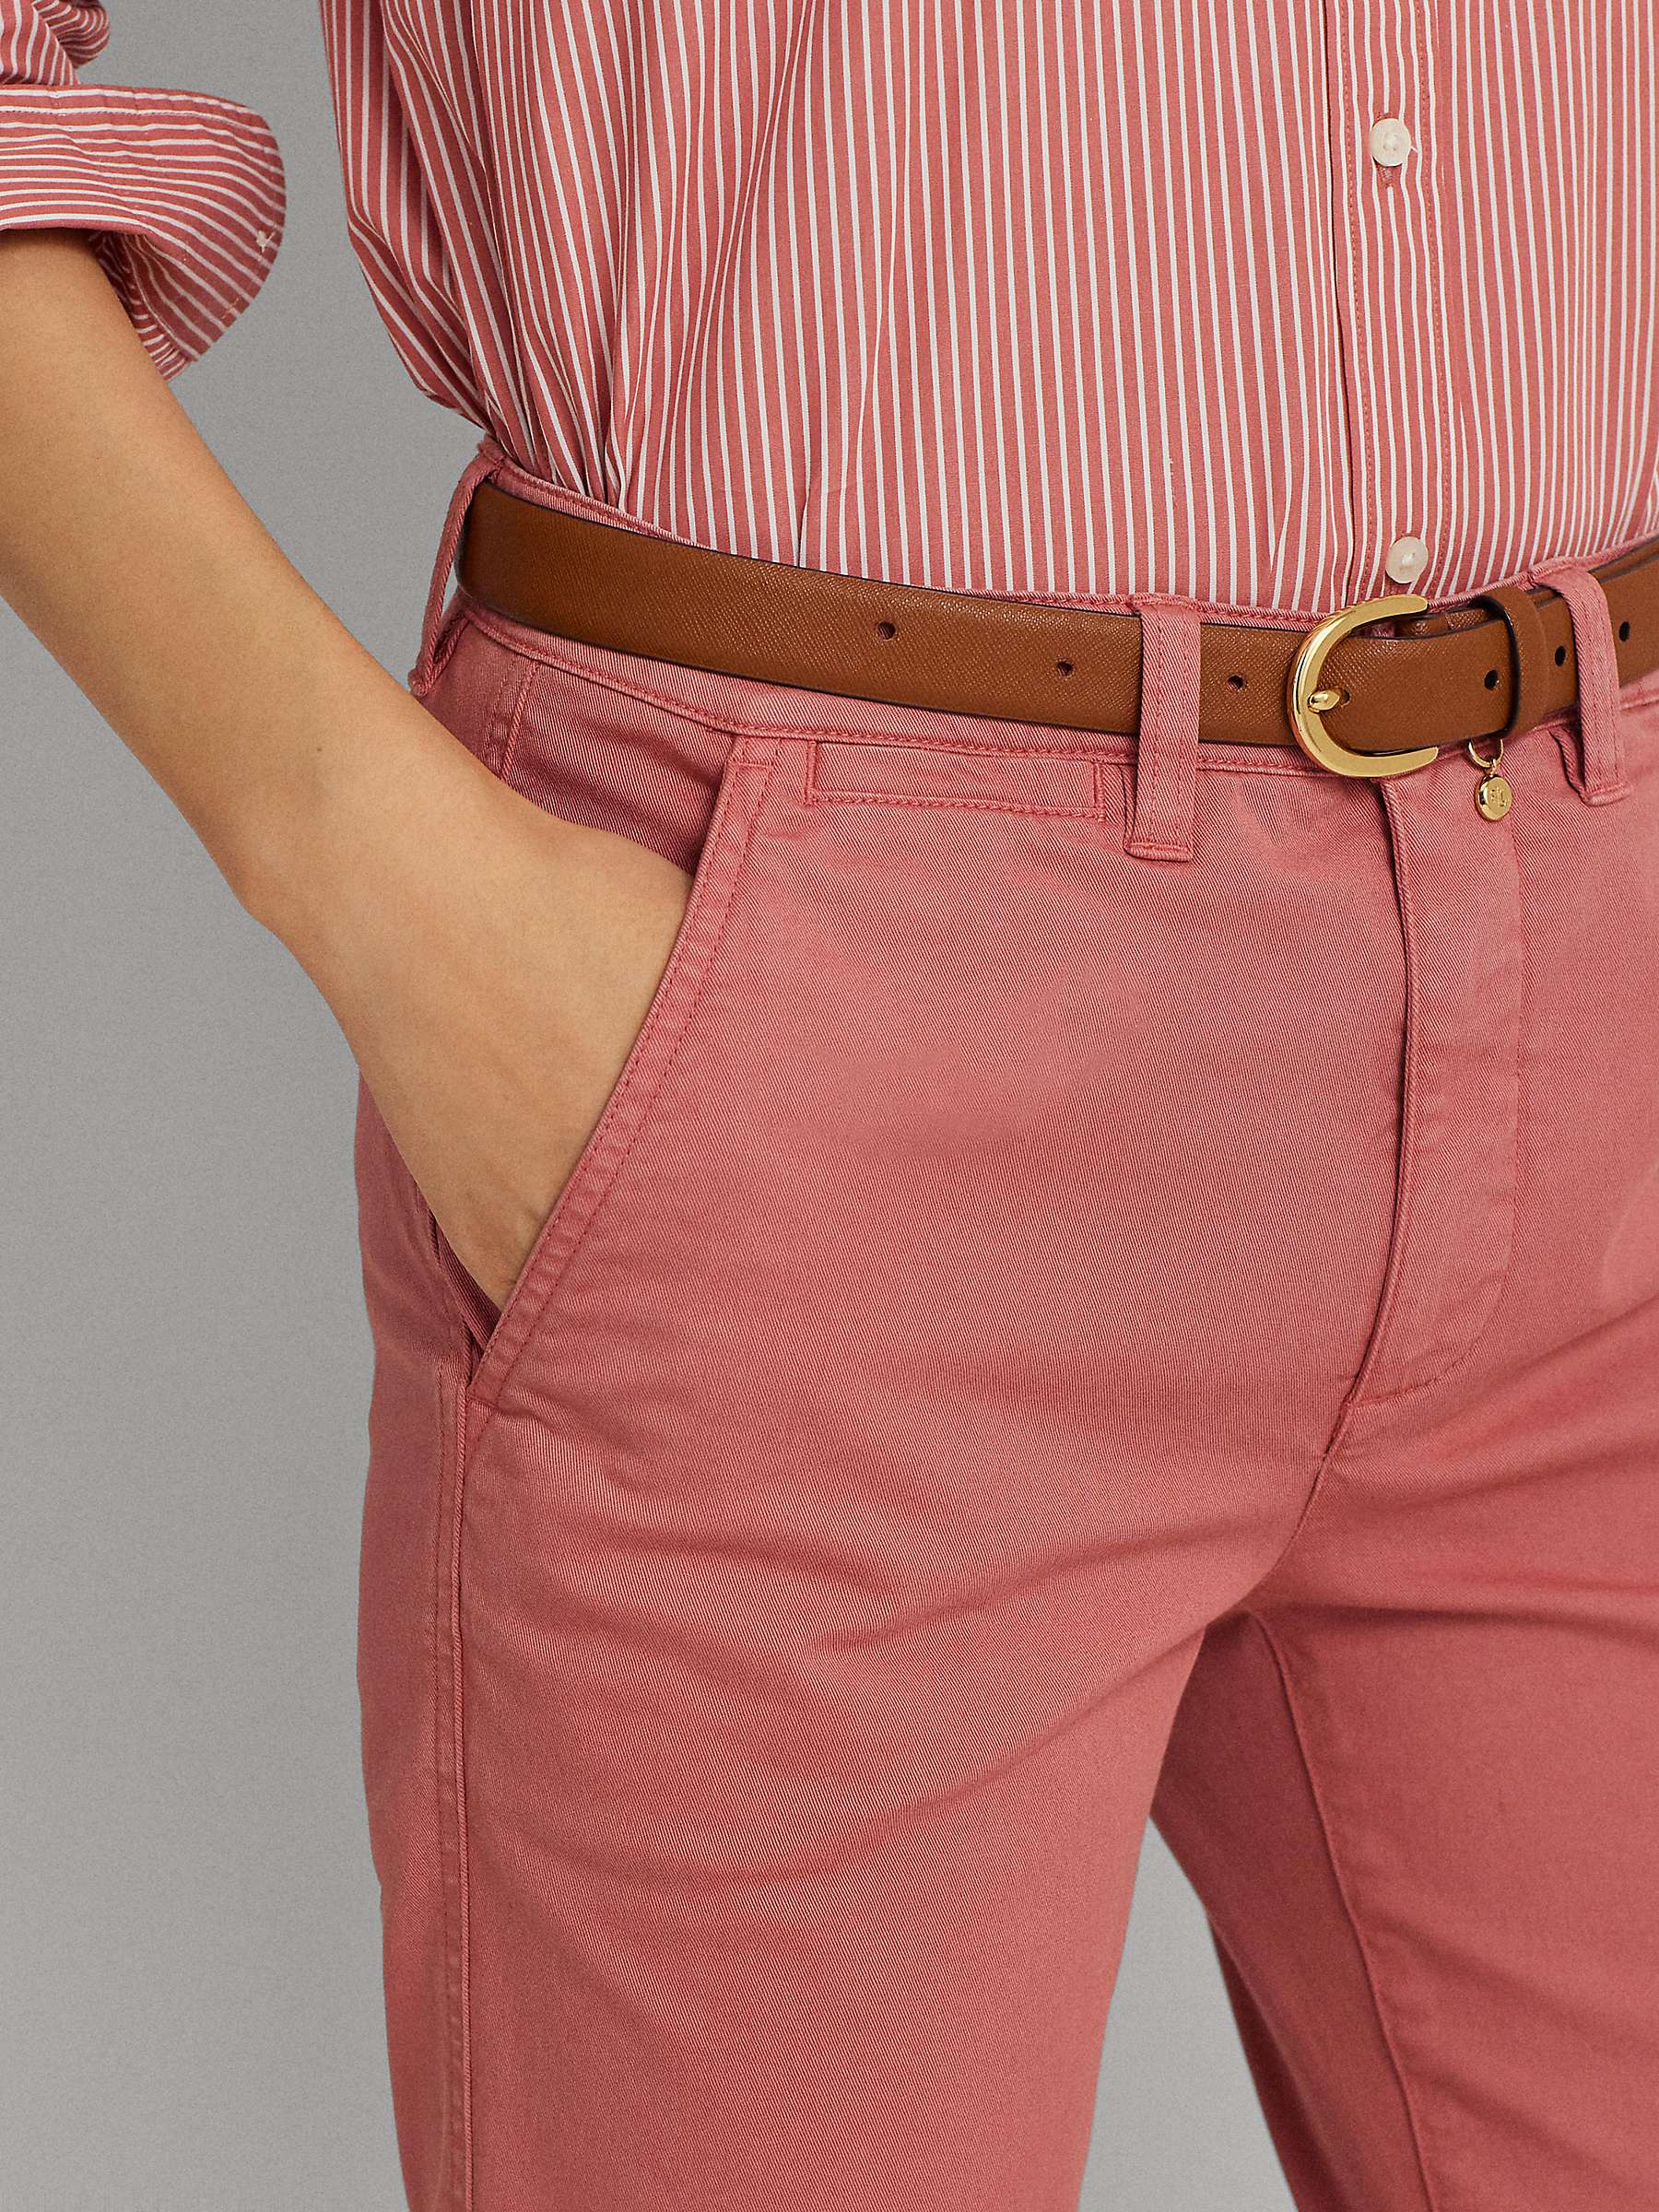 Buy Lauren Ralph Lauren Slim-Fit Stretch Chinos, Pink Mahogany Online at johnlewis.com